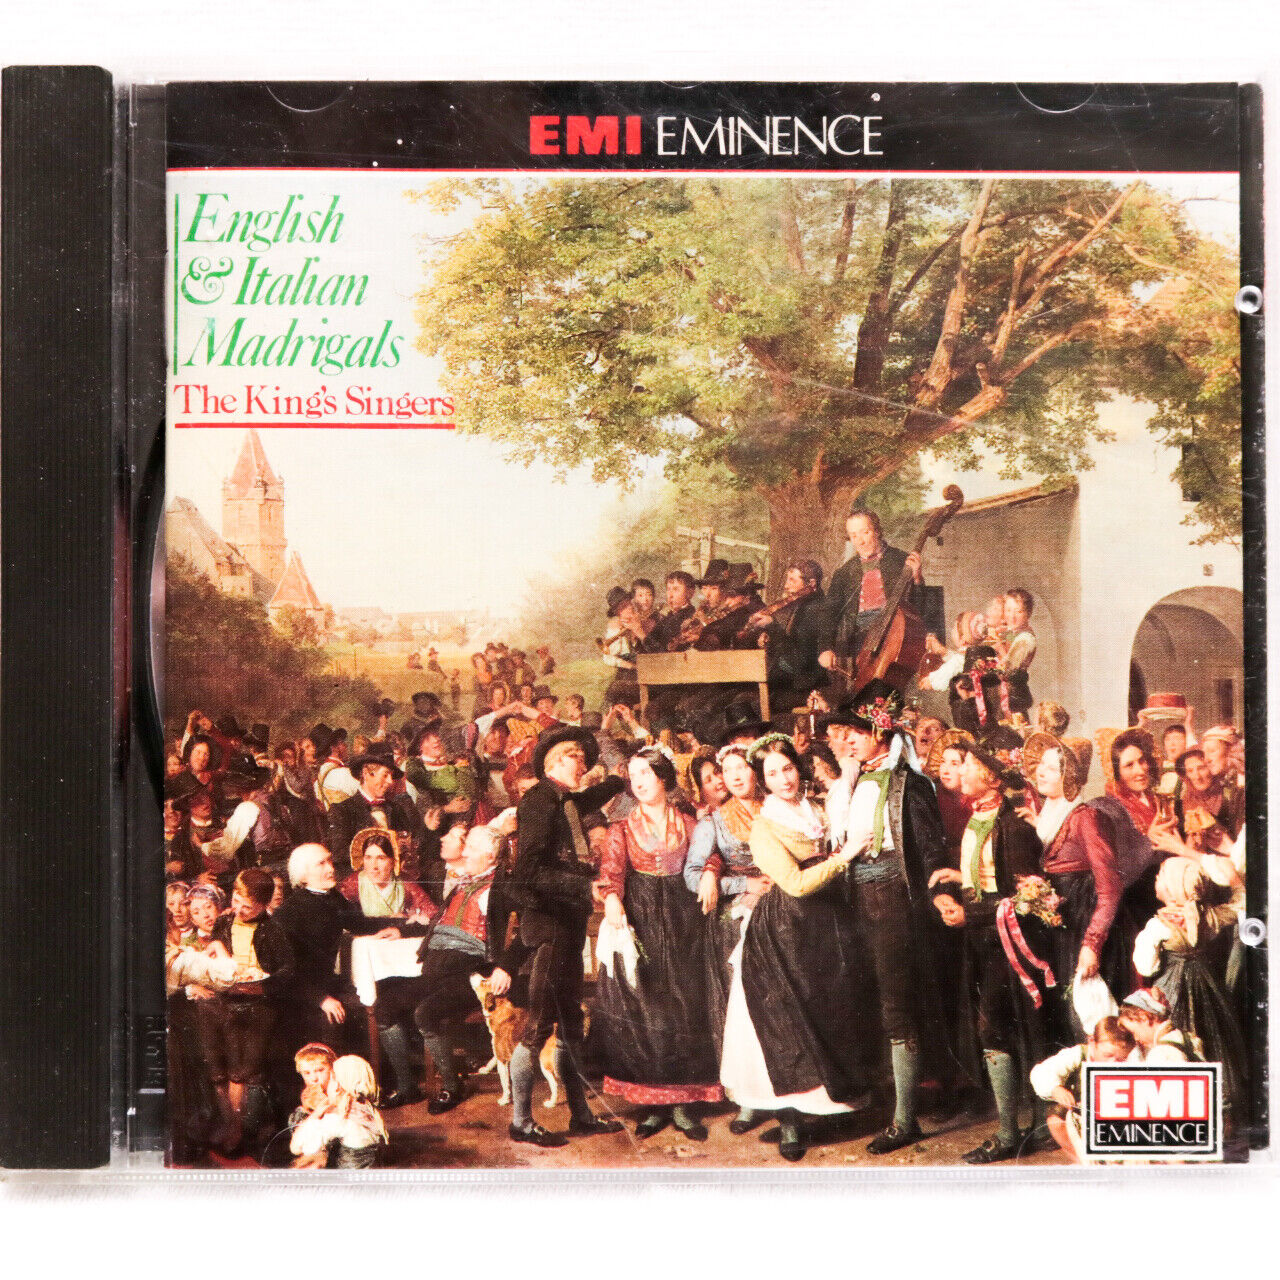 English & Italian Madrigals: The King's Singers (CD, EMI Eminence)